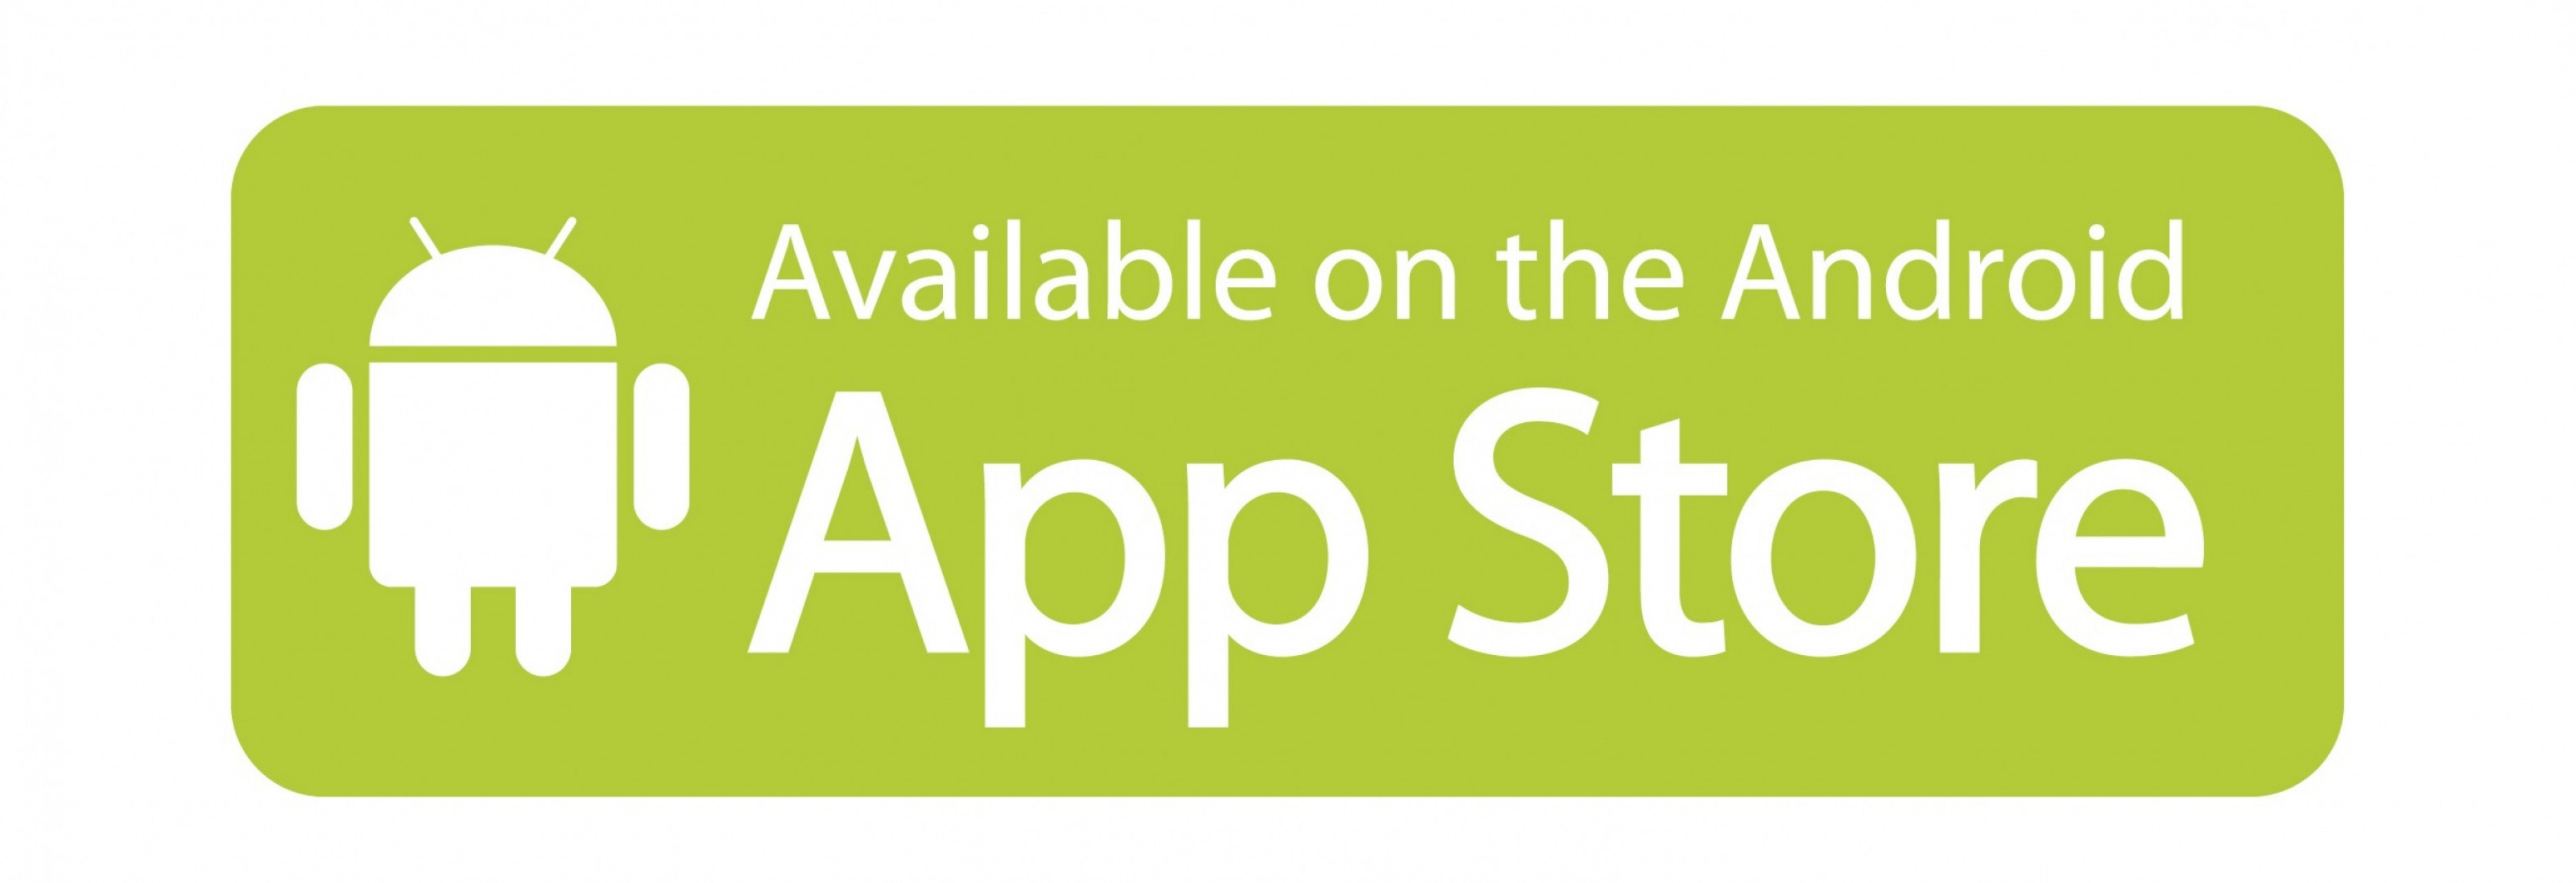 Android приложение загрузка. App Store. Магазин приложений. App Store Android. Магазины приложений для андроид логотипы.